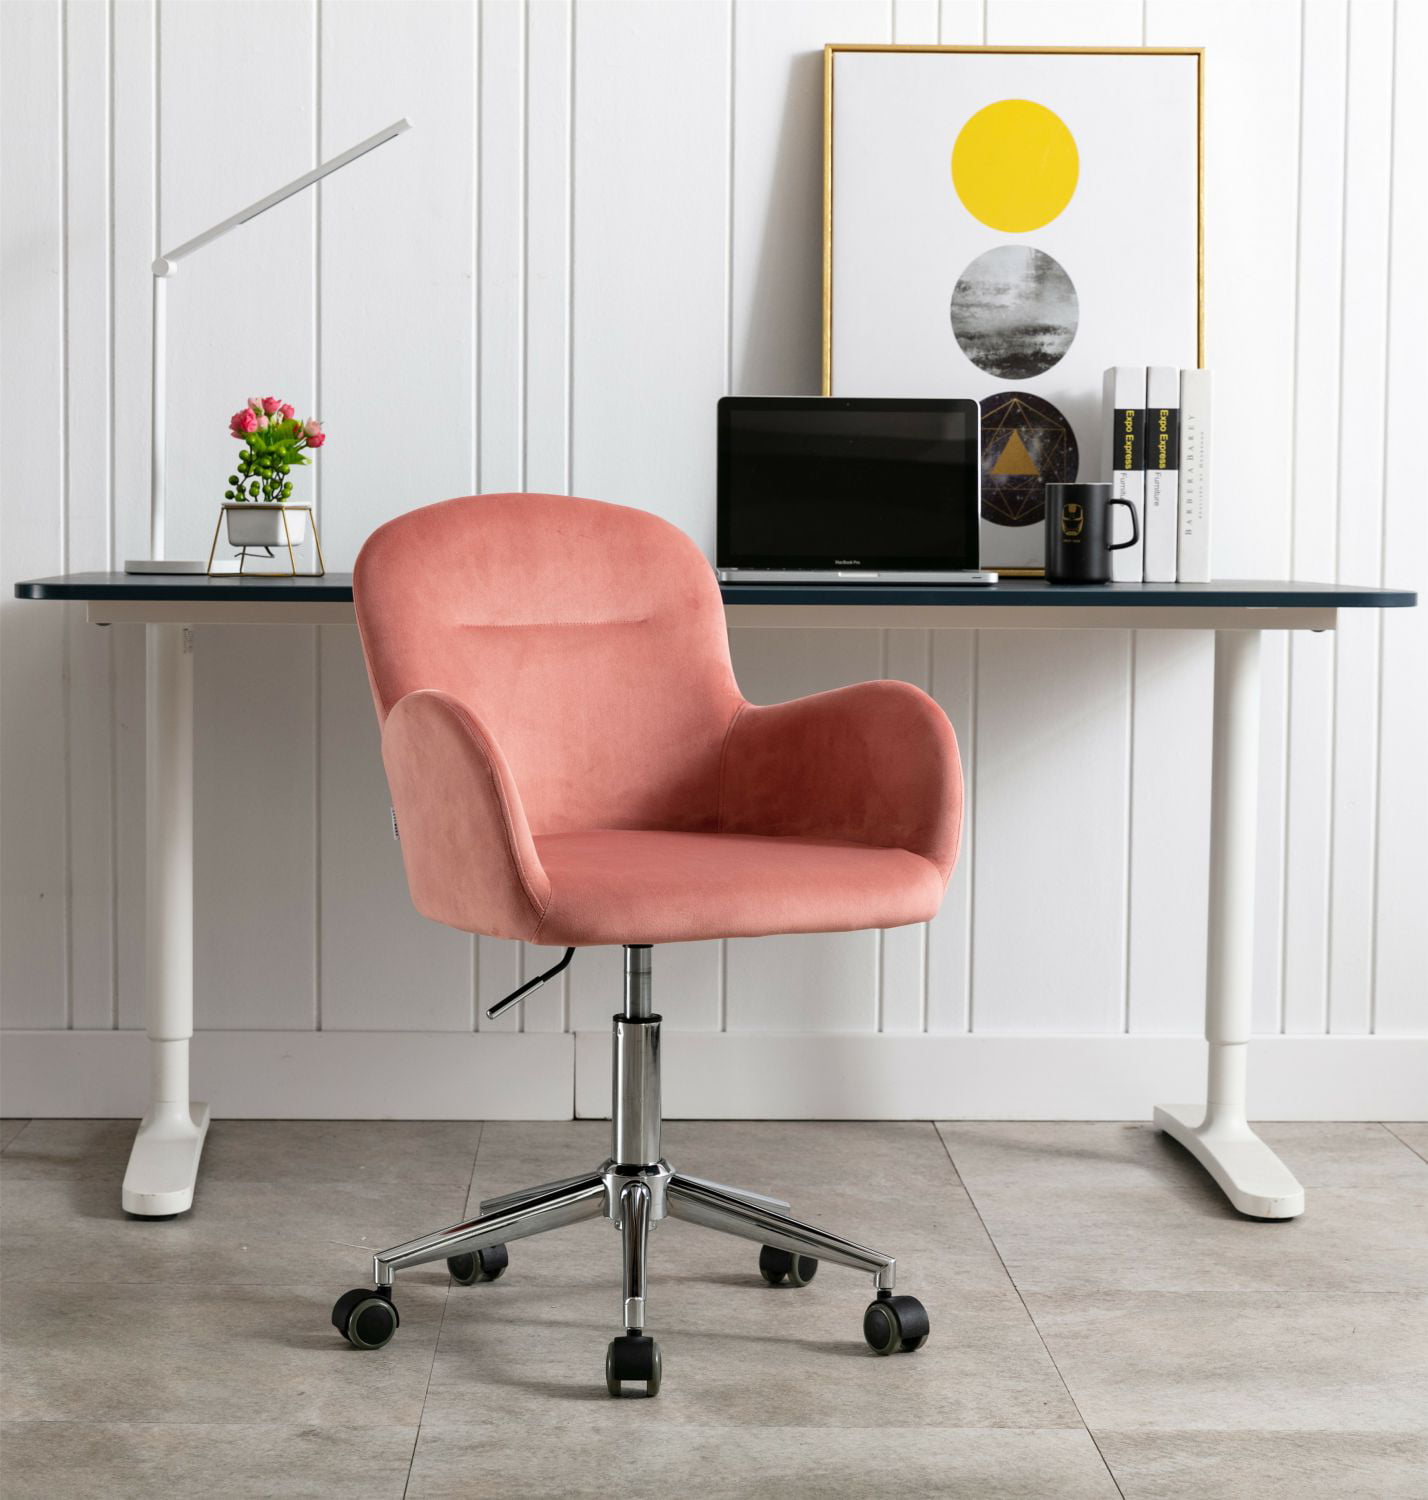 Ergonomic Office Velvet Chair with Wheels, Home Office Executive Desk